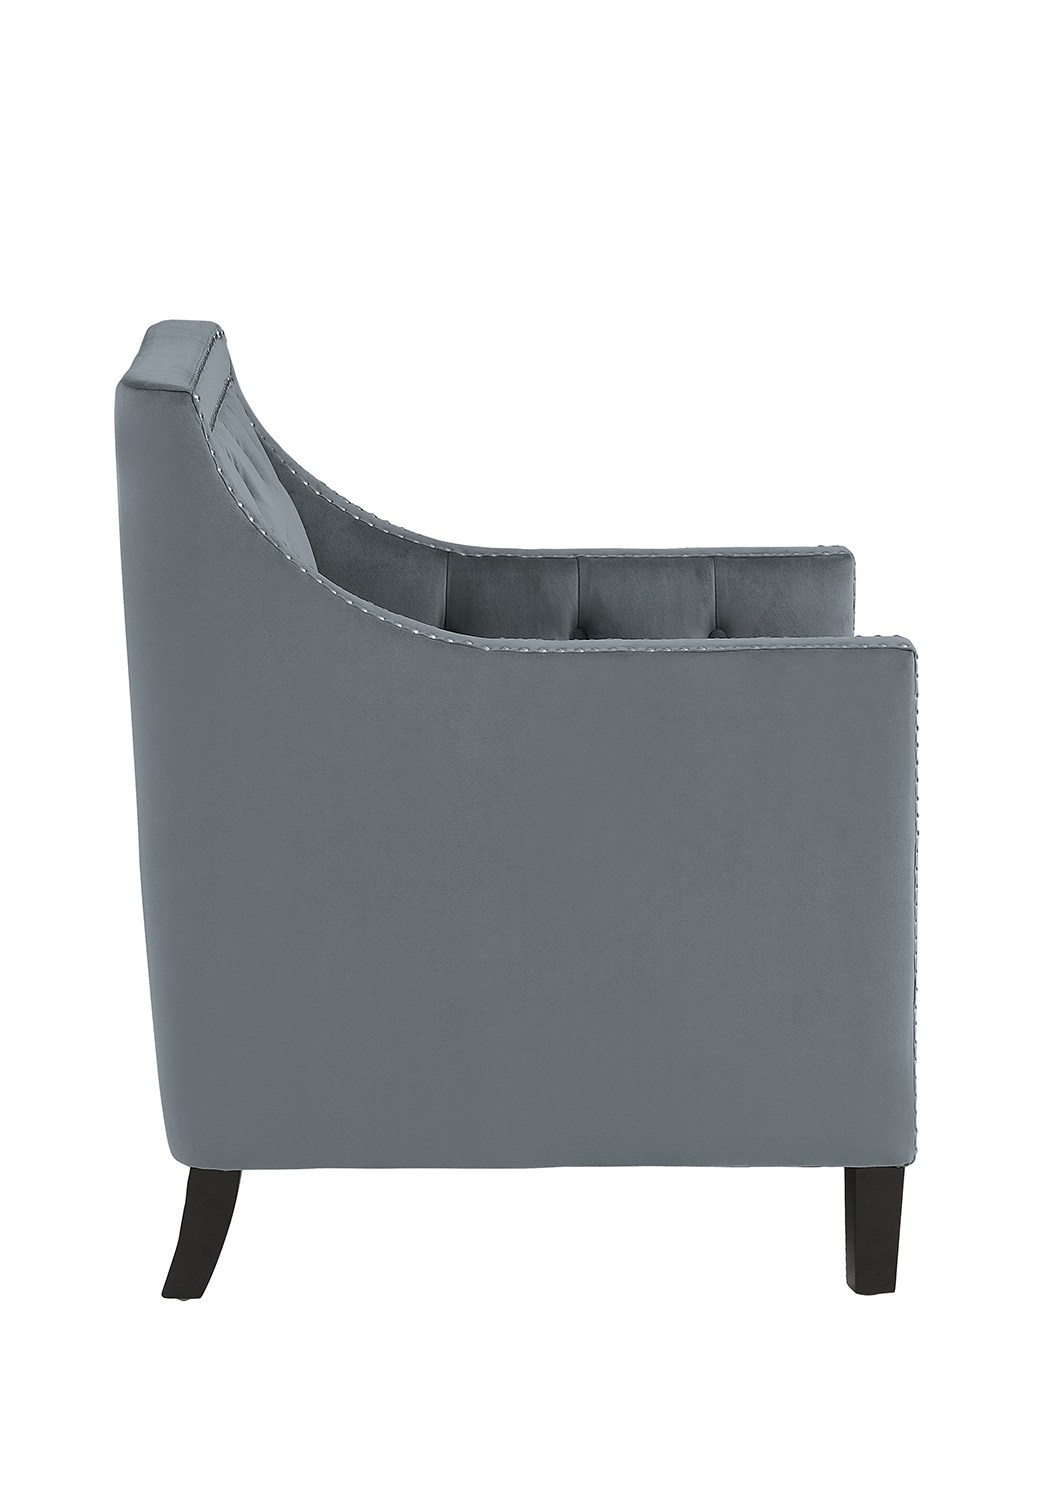 Homelegance Grazioso Accent Chair - Gray